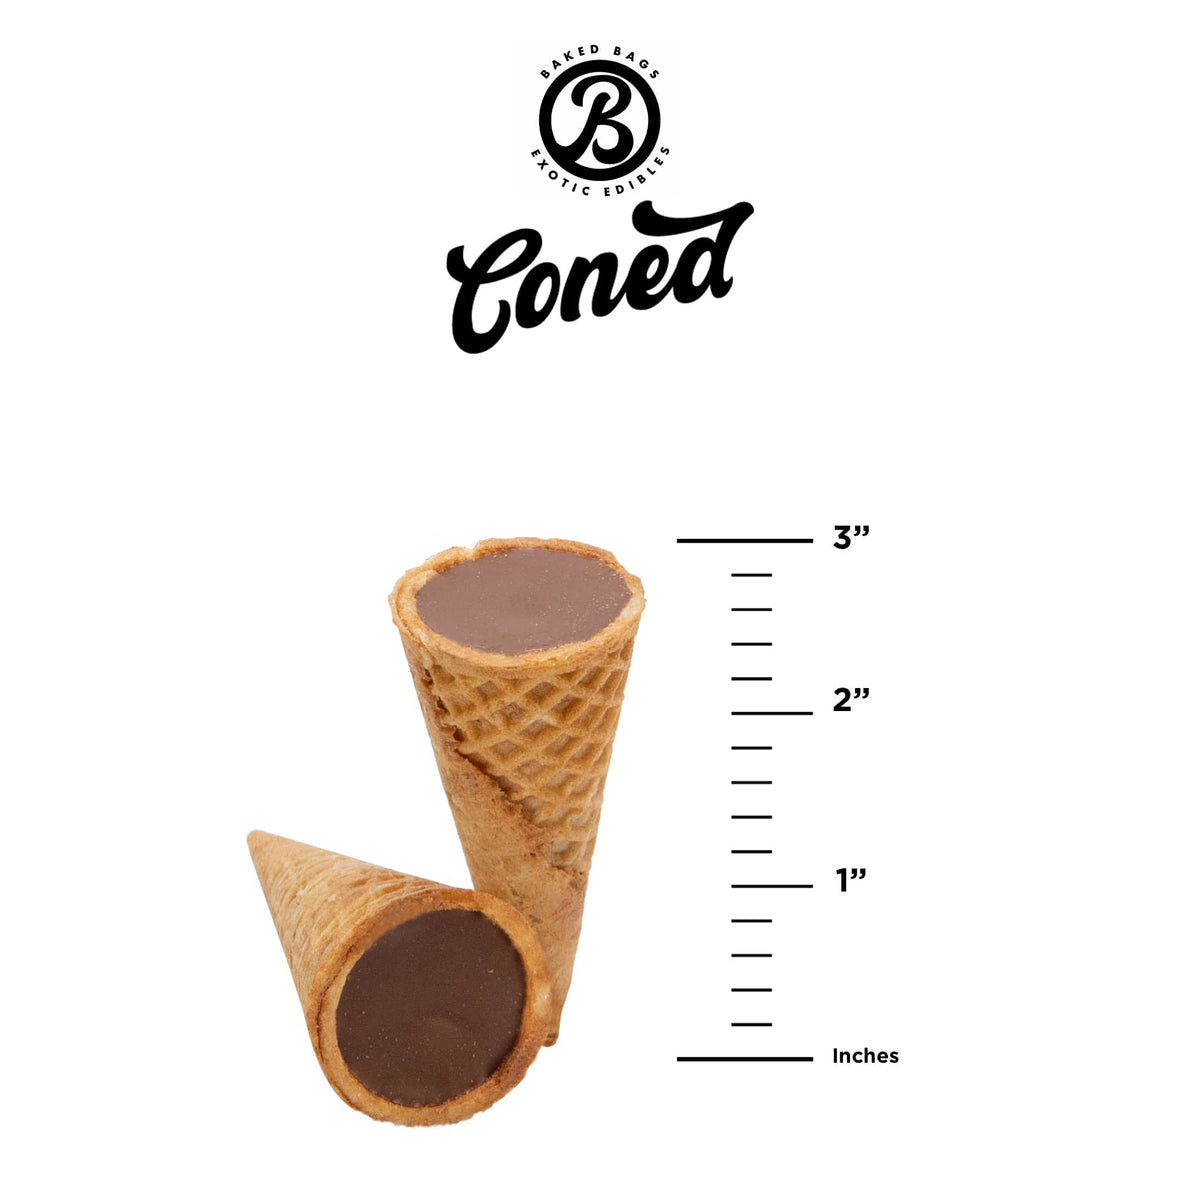 Coned Edible Ice Cream Cones